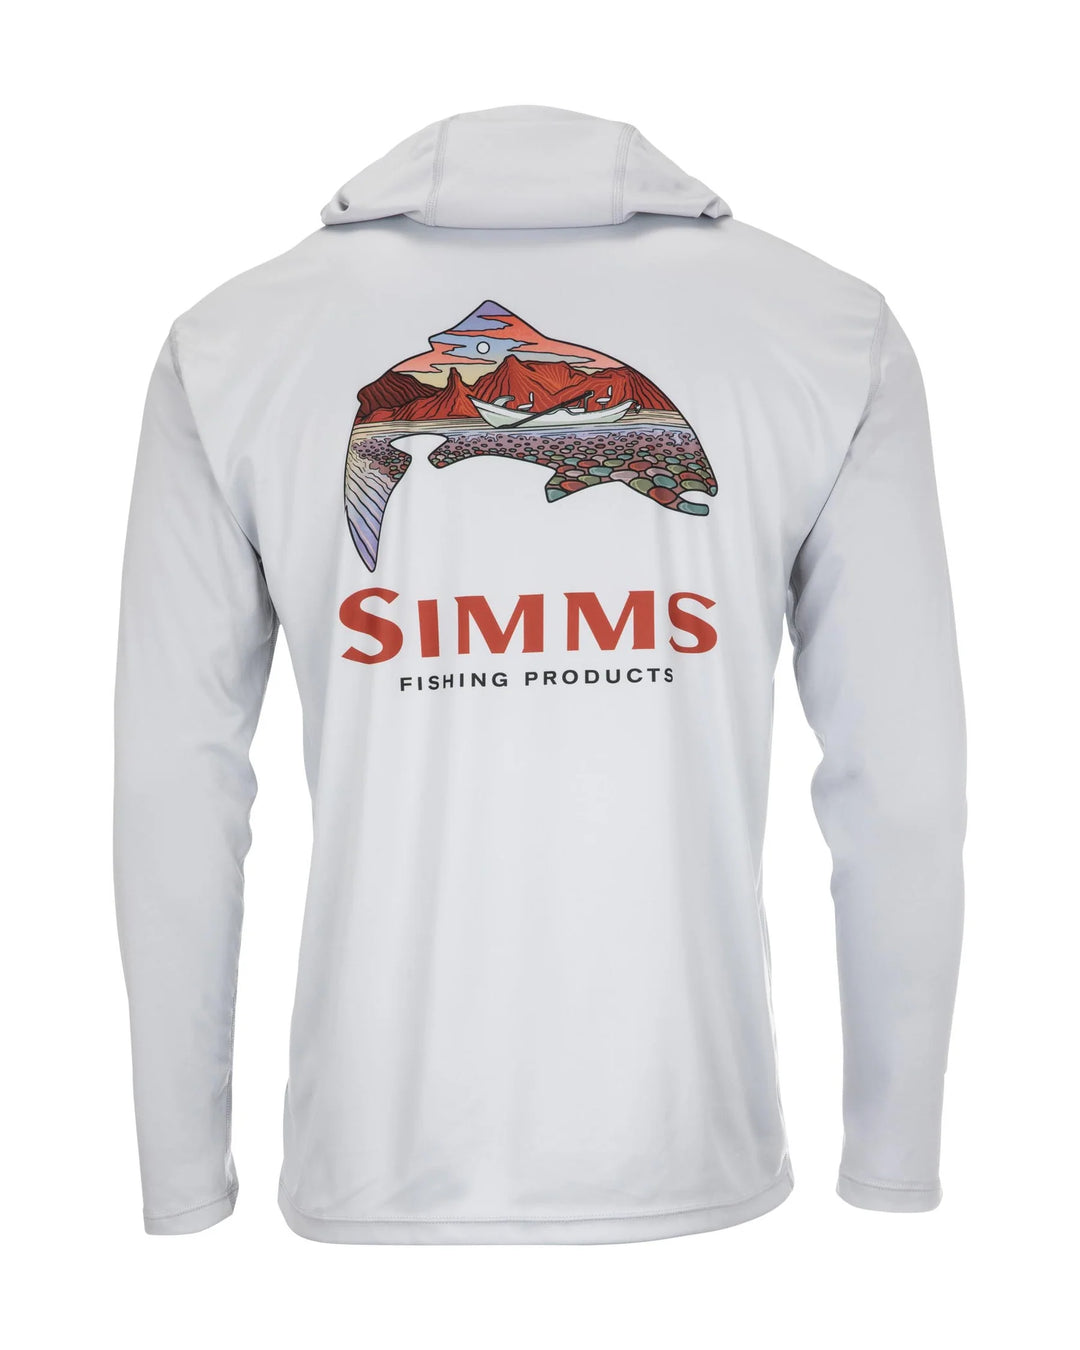 SIMMS Fishing Men's Long Sleeve Performance Shirt 50+ UPF